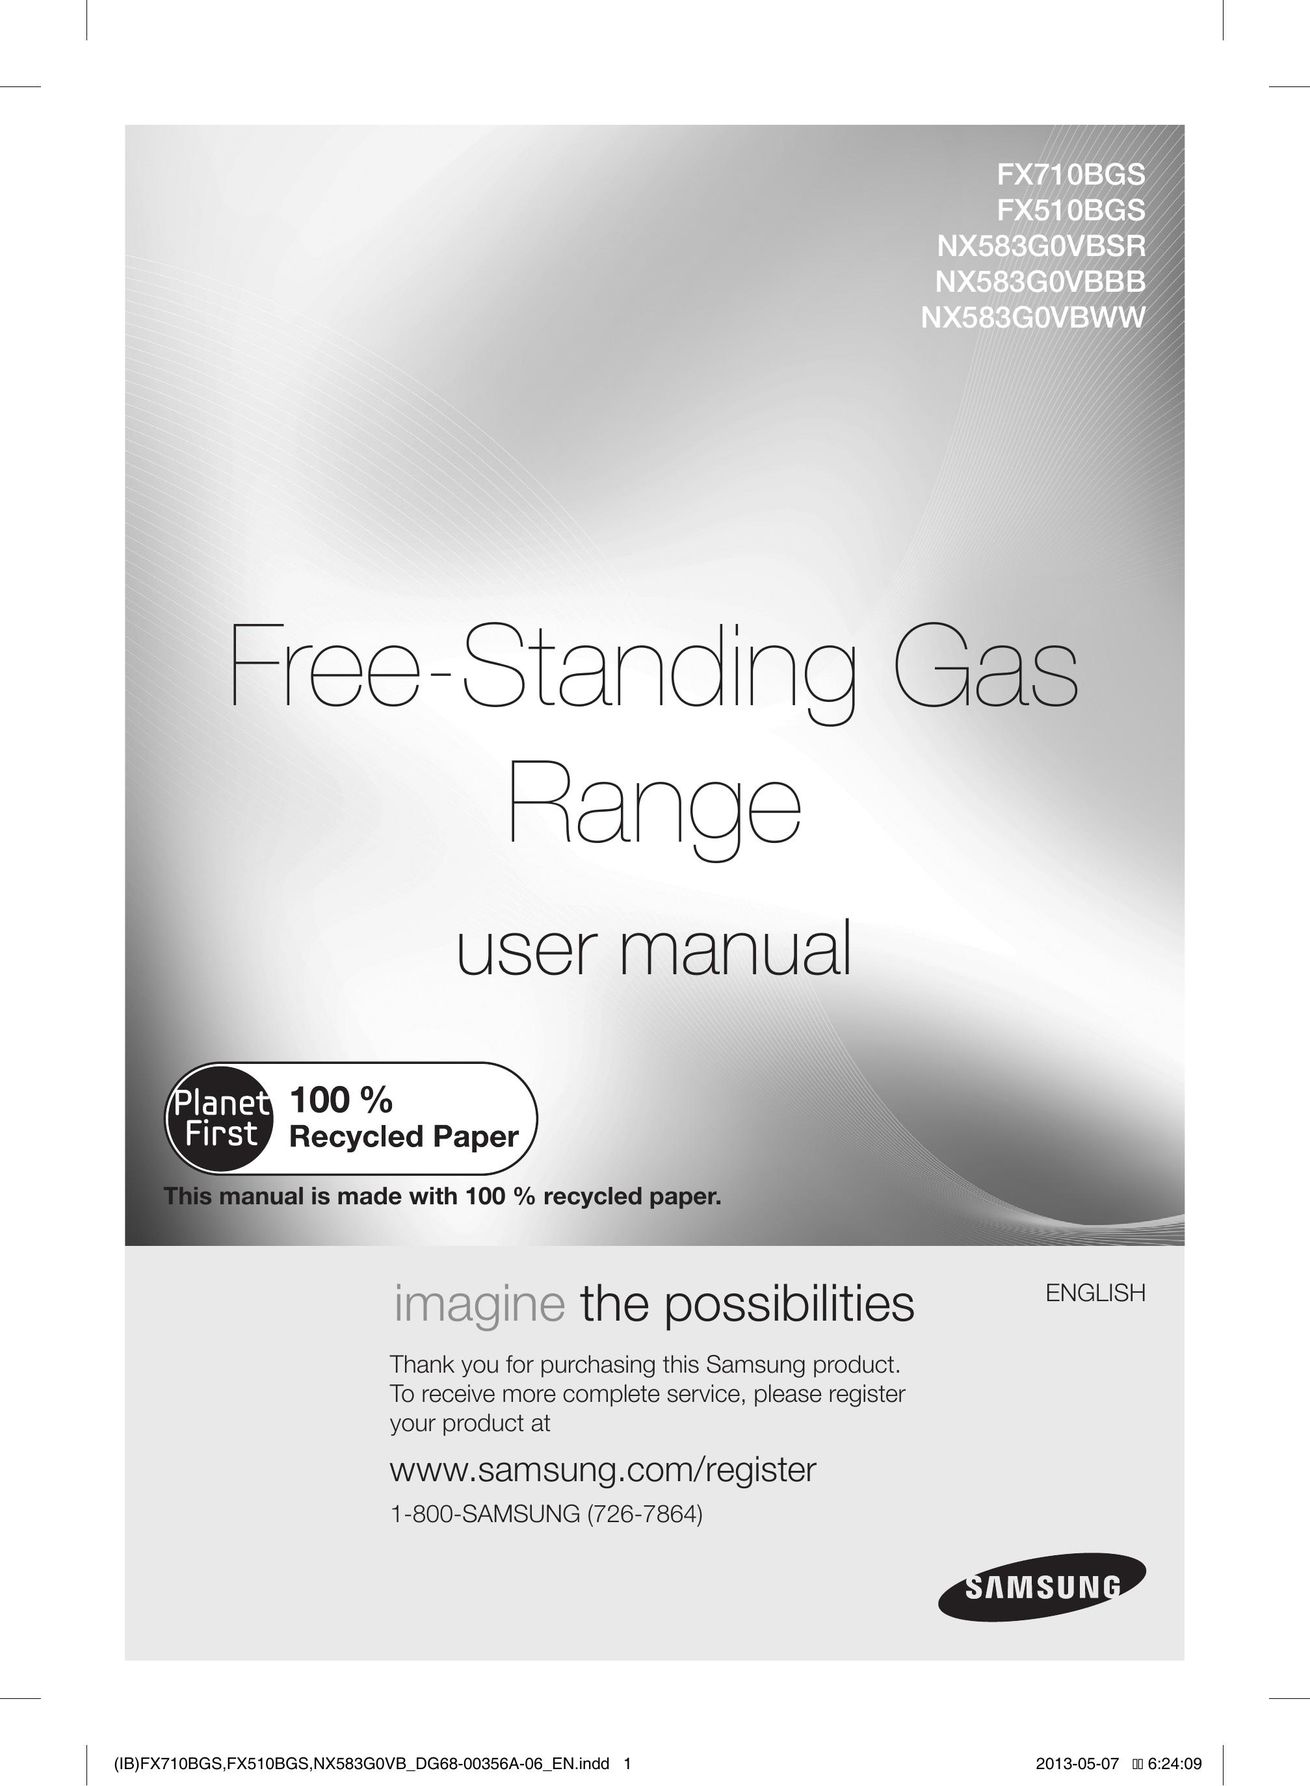 Samsung FX710BGS Range User Manual